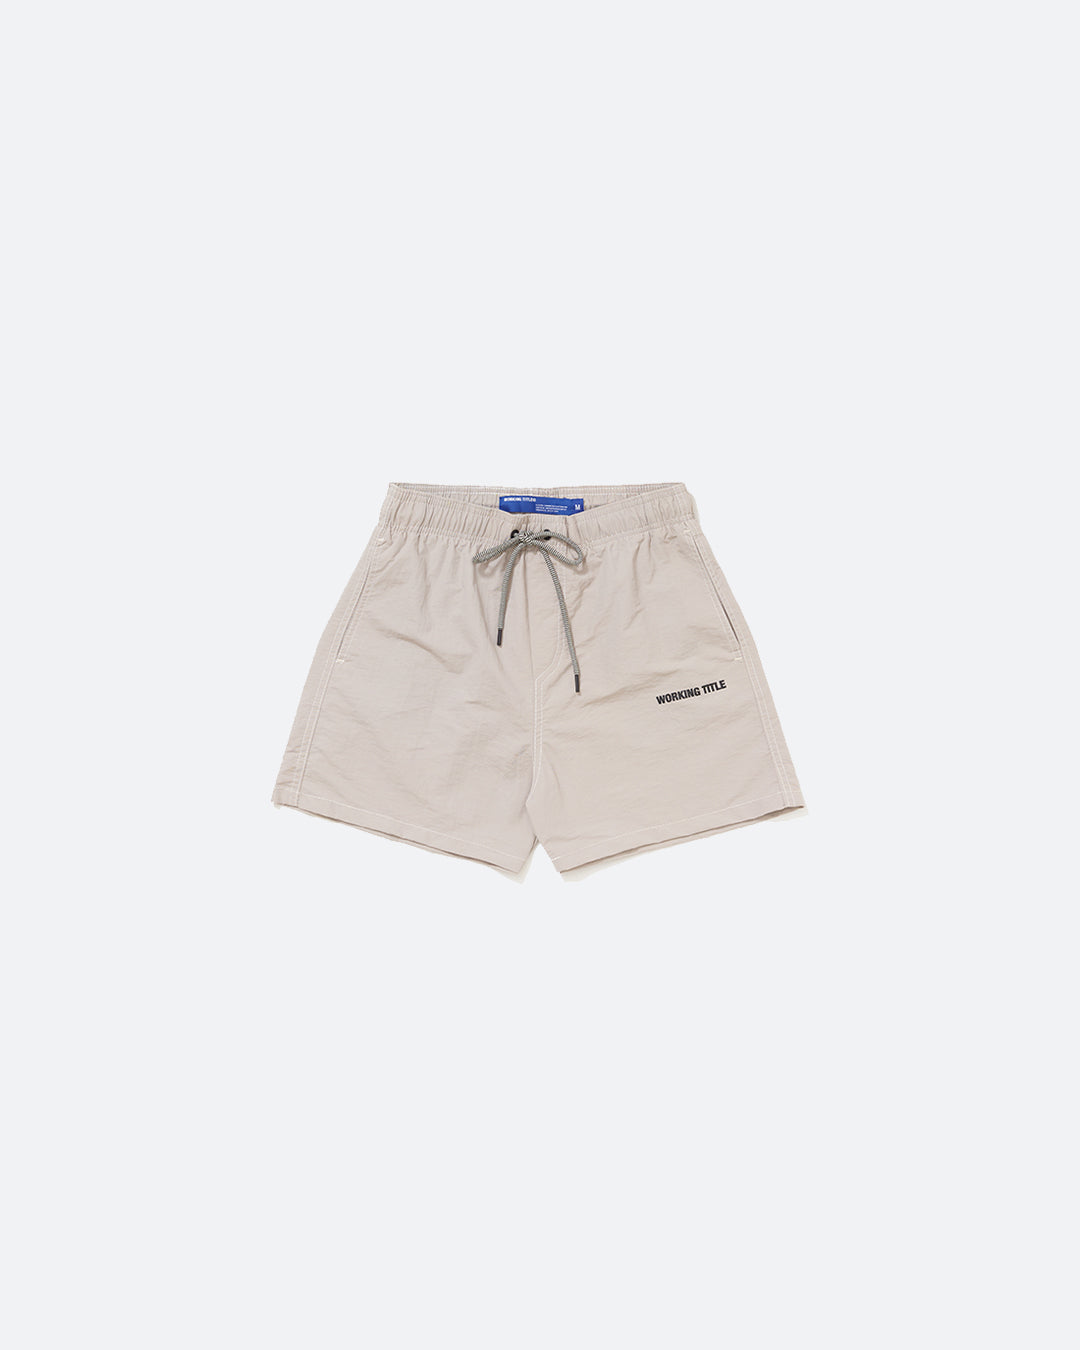 The Classic Nylon Shorts